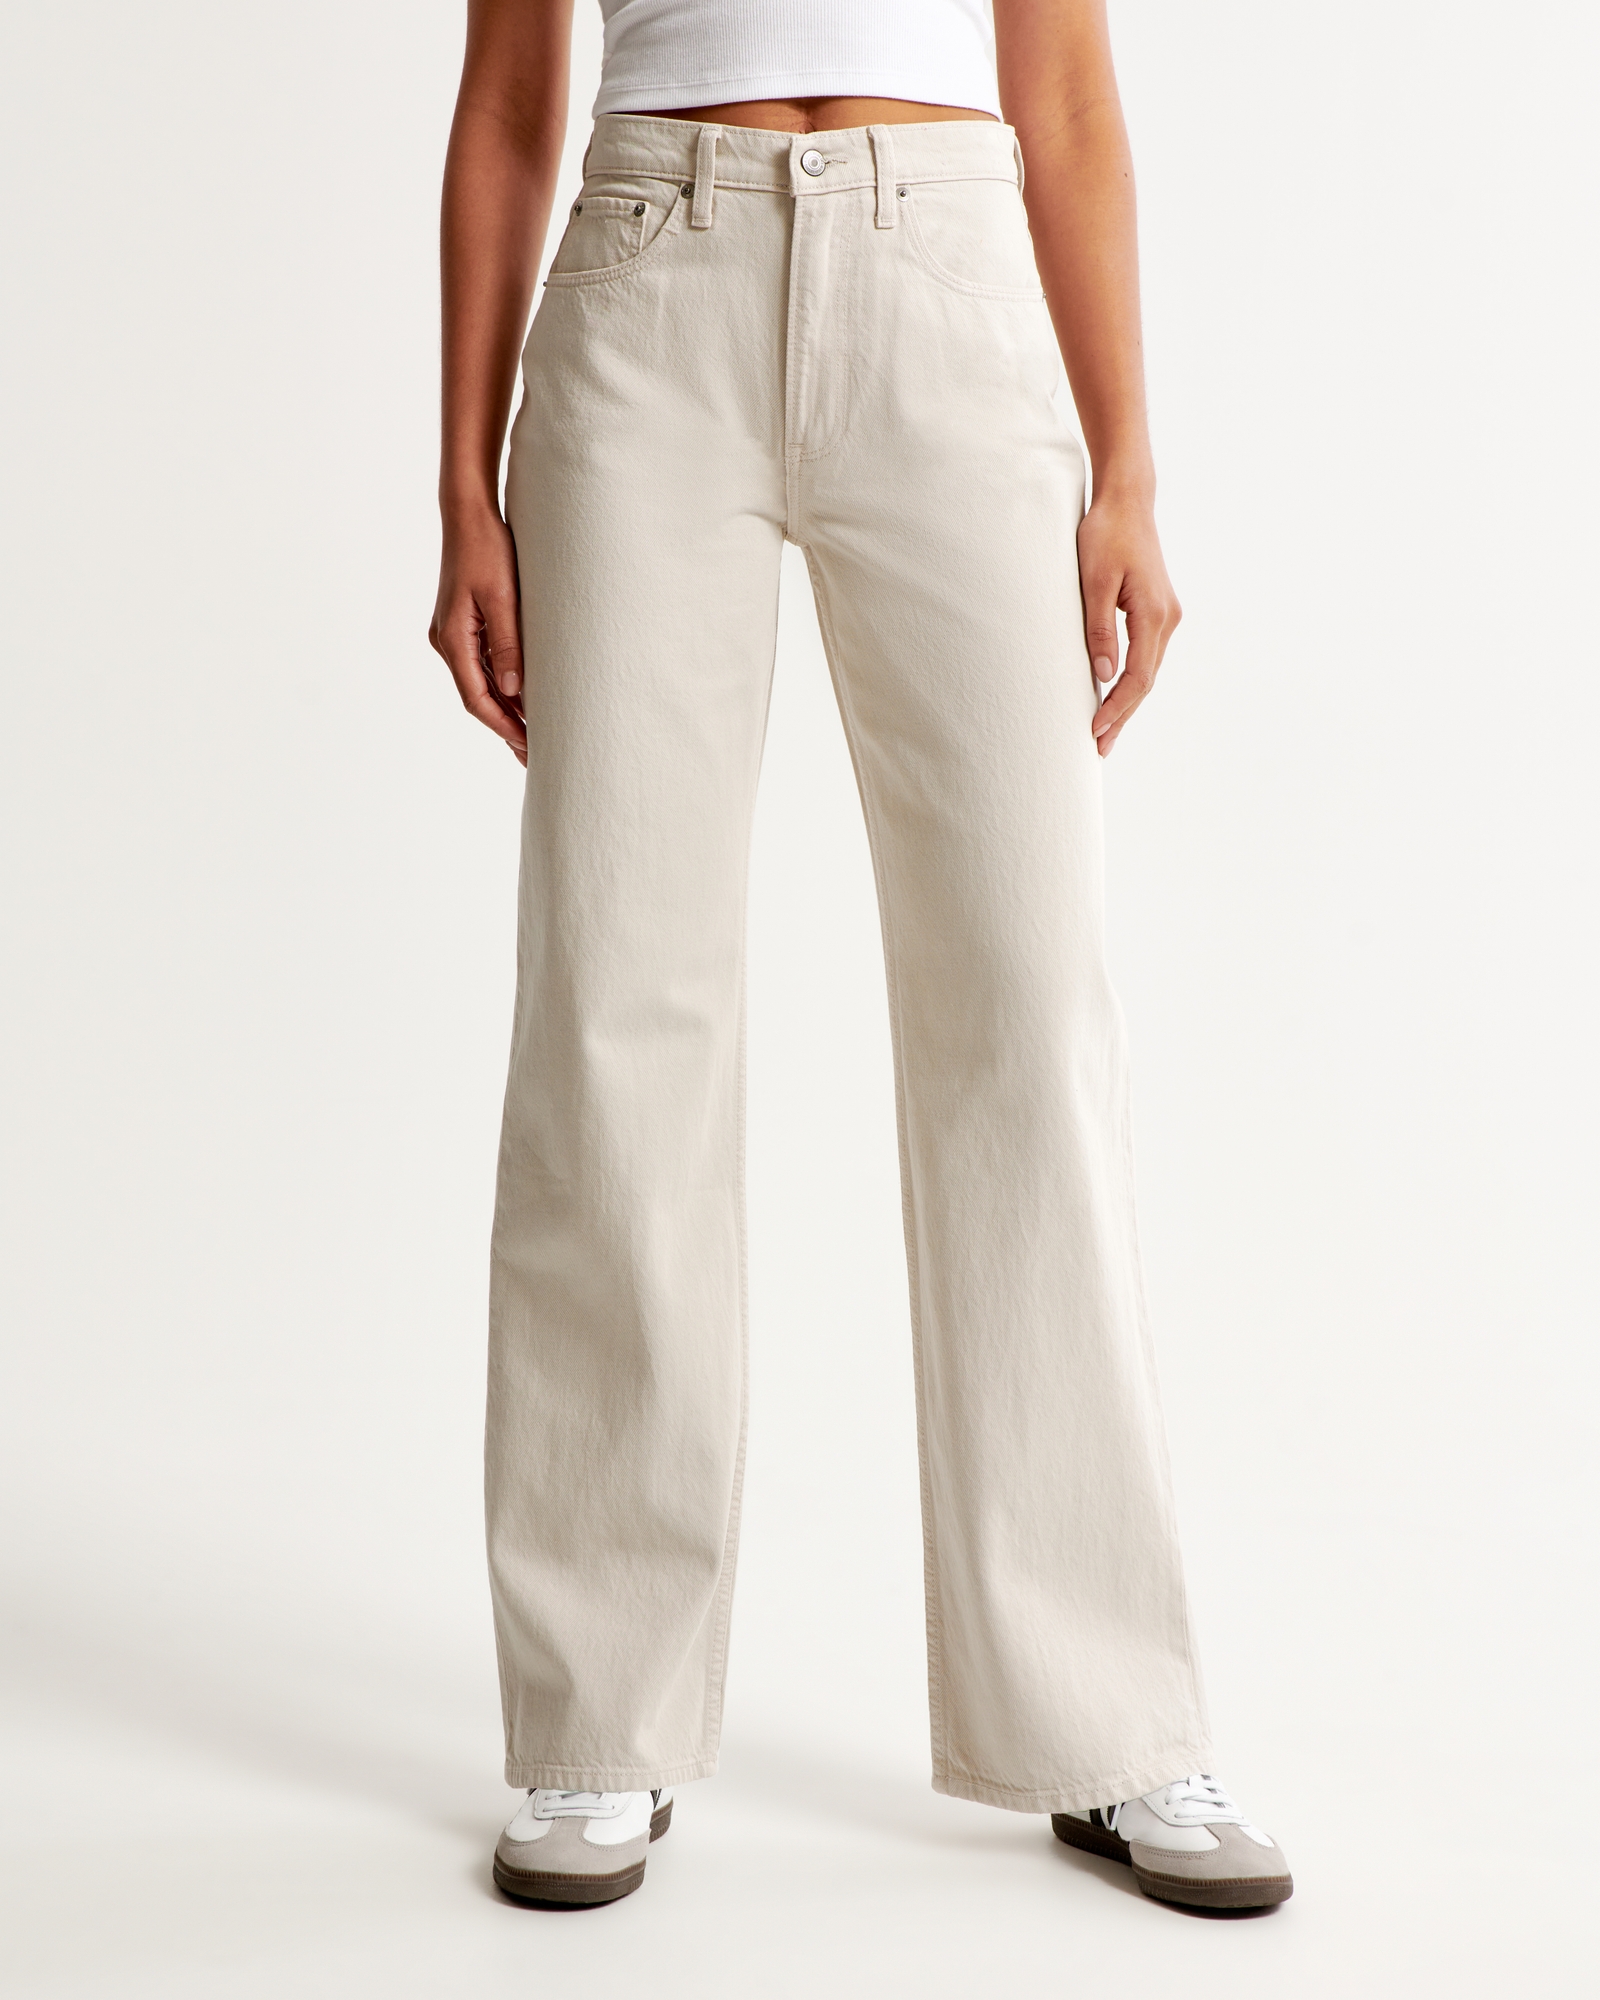 luvamia Women's High Rise Casual Broken Hole Skinny Slim Fit Stretch Denim Capri  Jeans, L, Fit Size 12 Size 14 